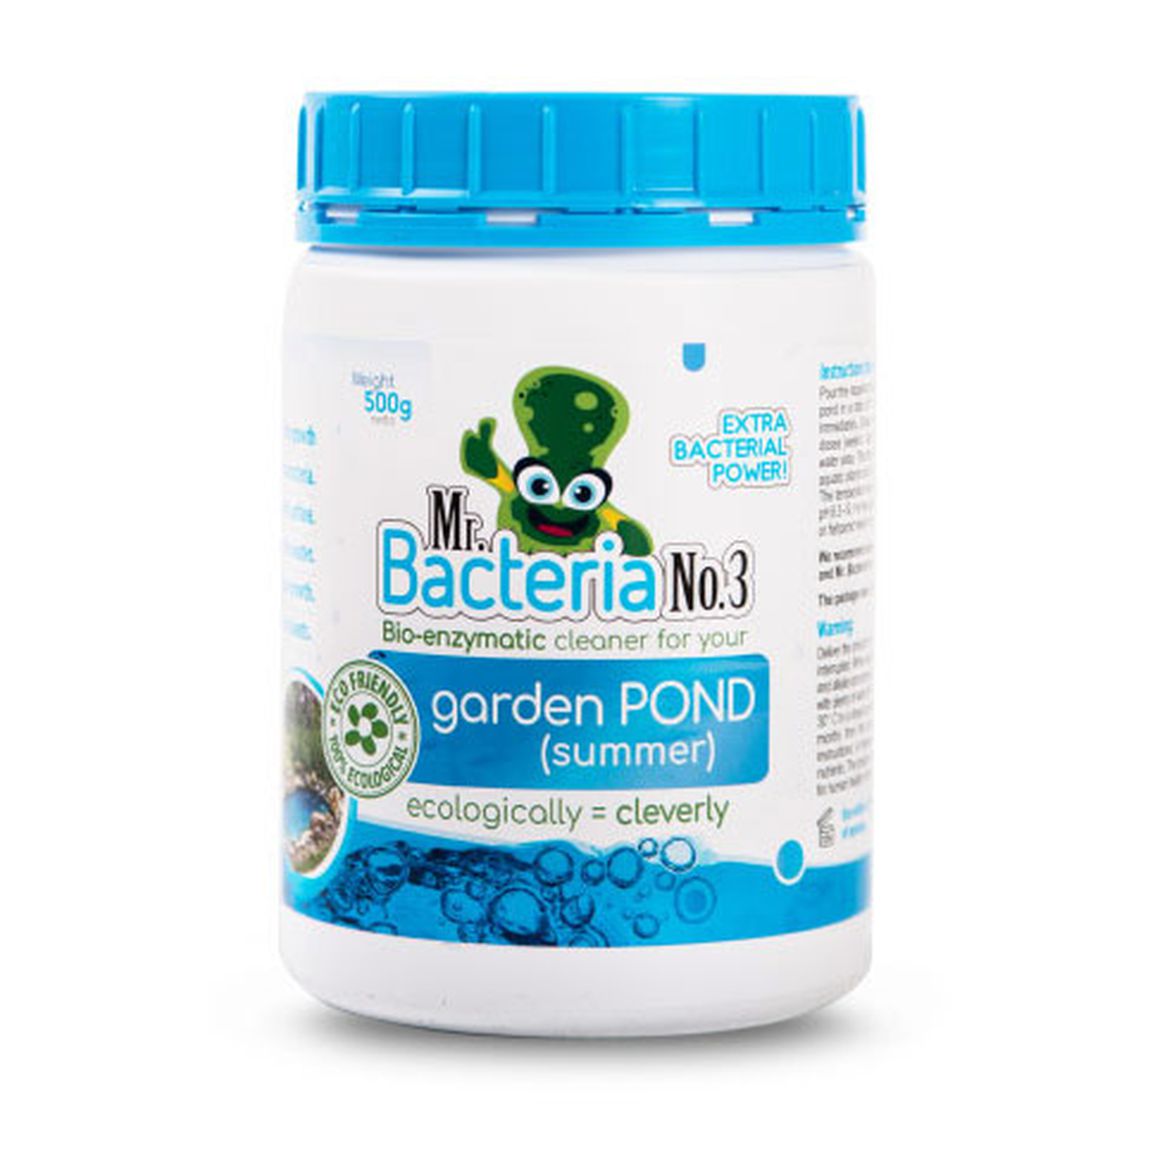 Bio-enzymatic cleaner for your garden POND (summer) 500g